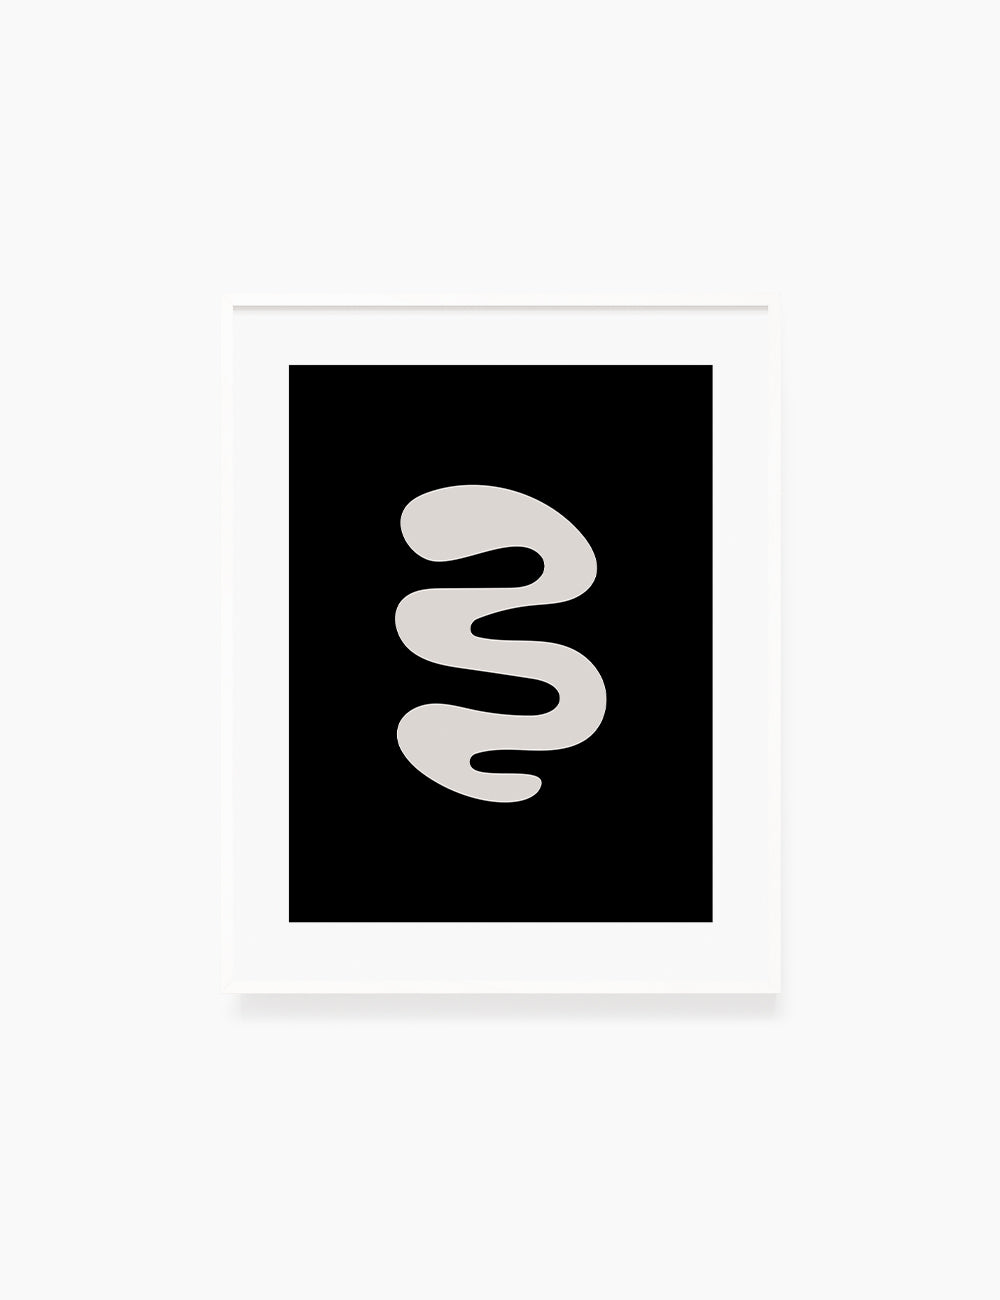 Black and Beige Minimalist Art. Abstract Curvy Shape.